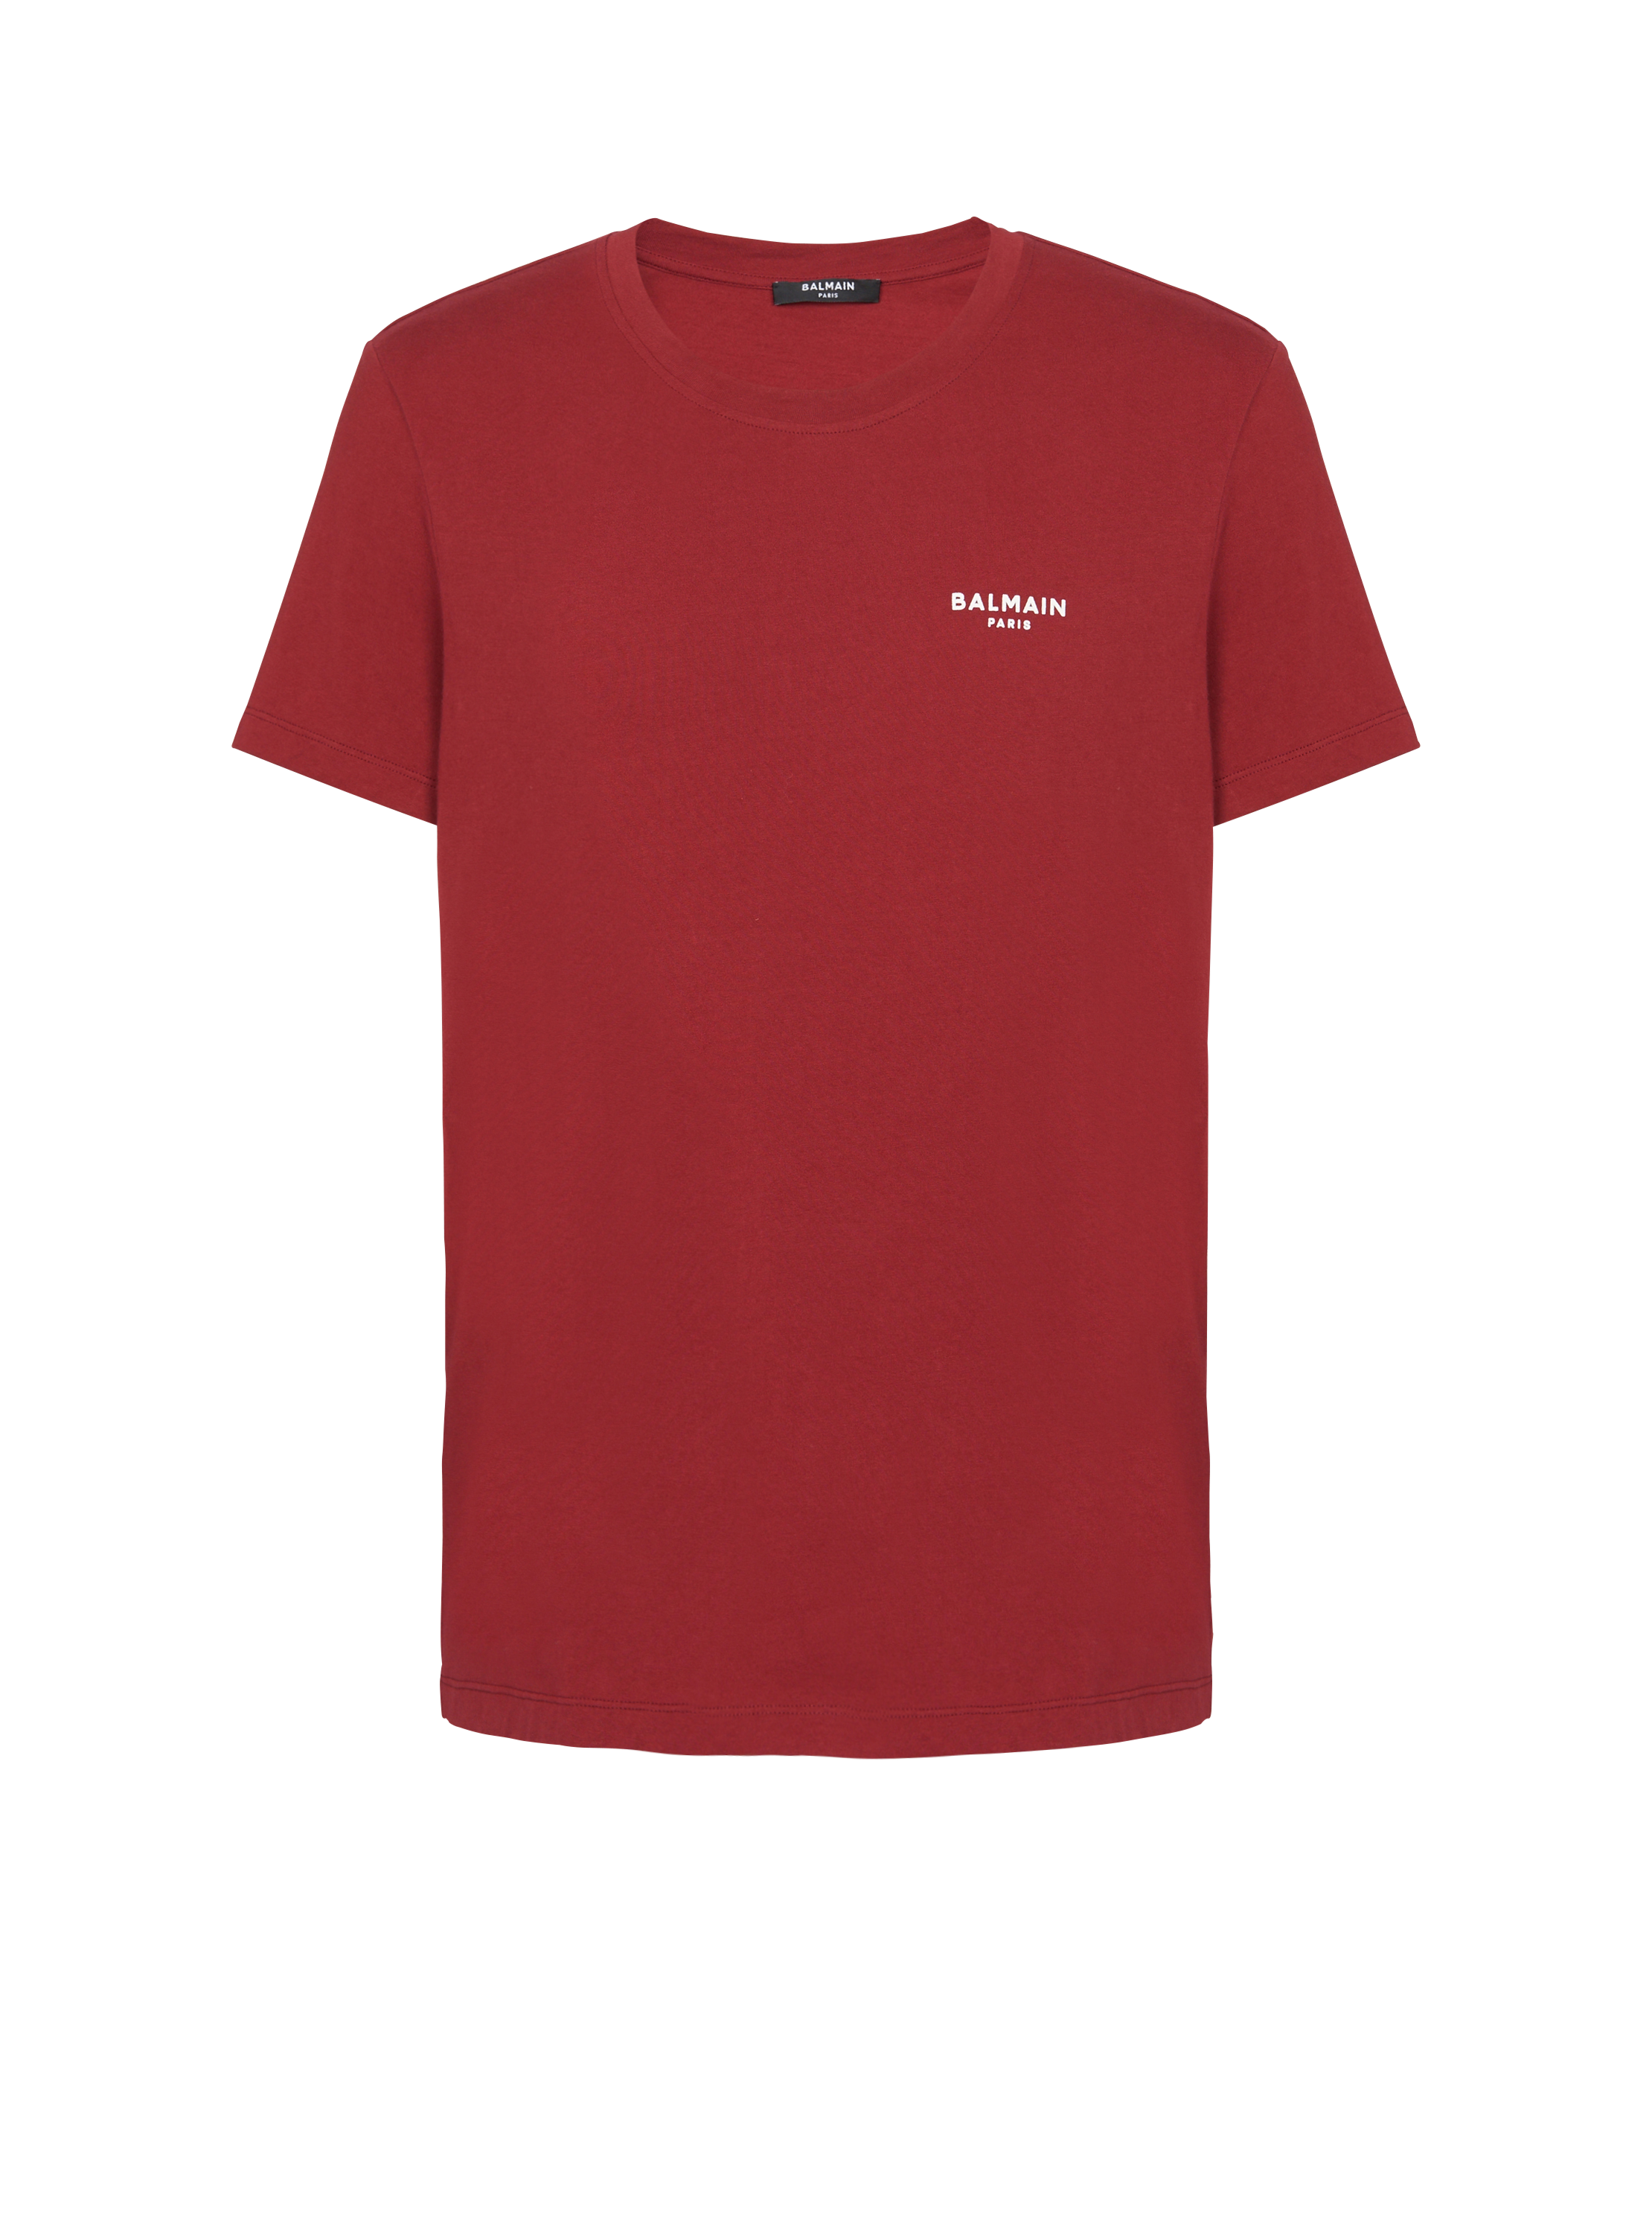 Flocked Balmain T-shirt, red, hi-res